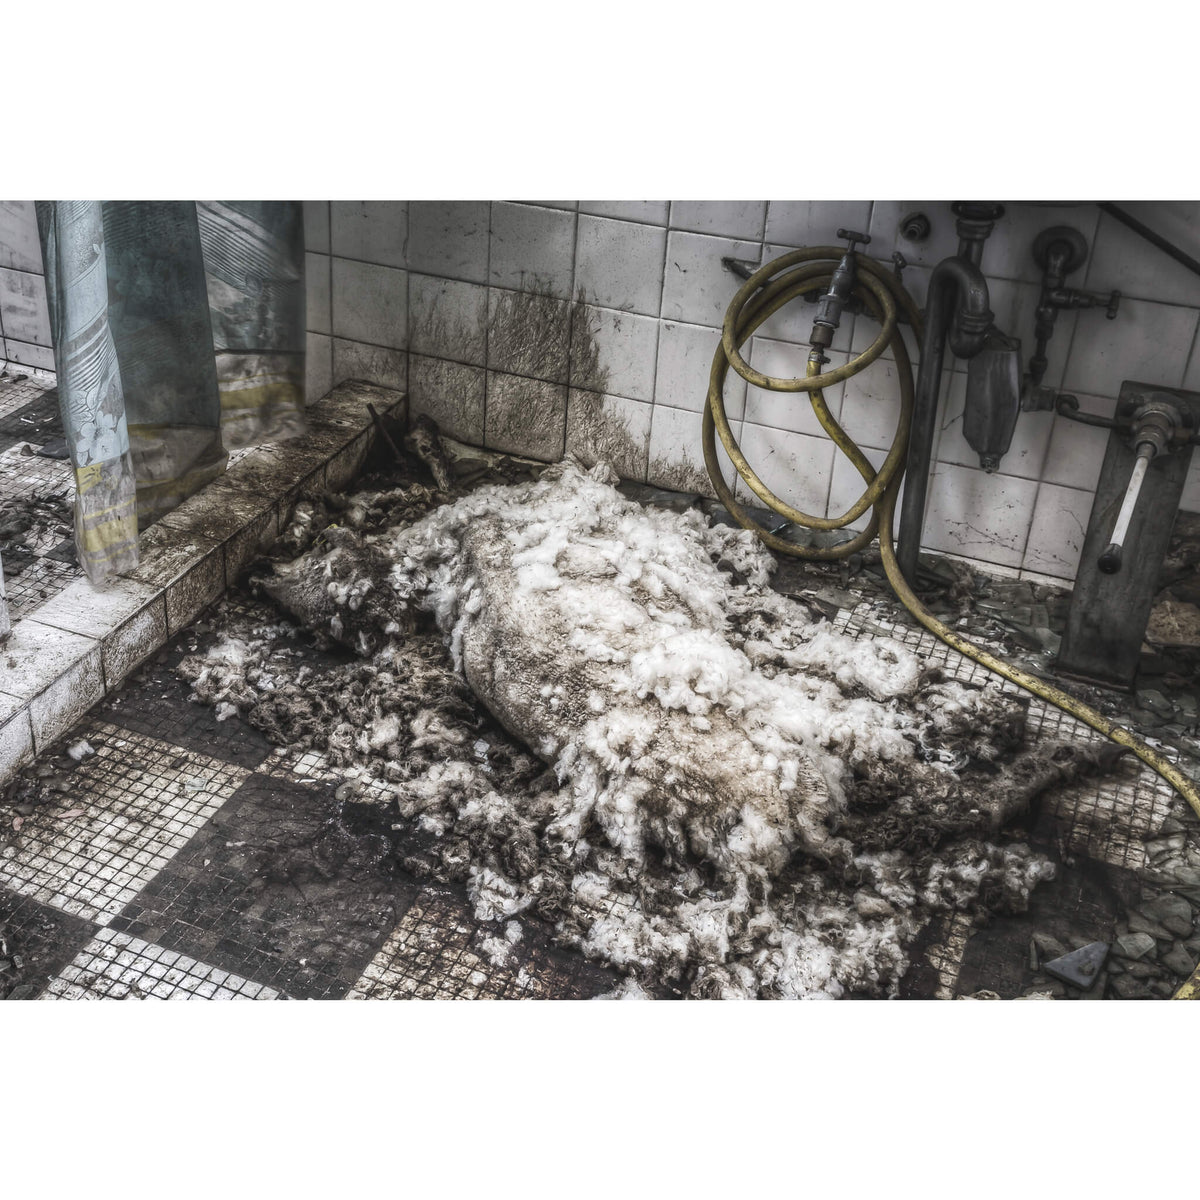 Dead Sheep | Blayney Abattoir